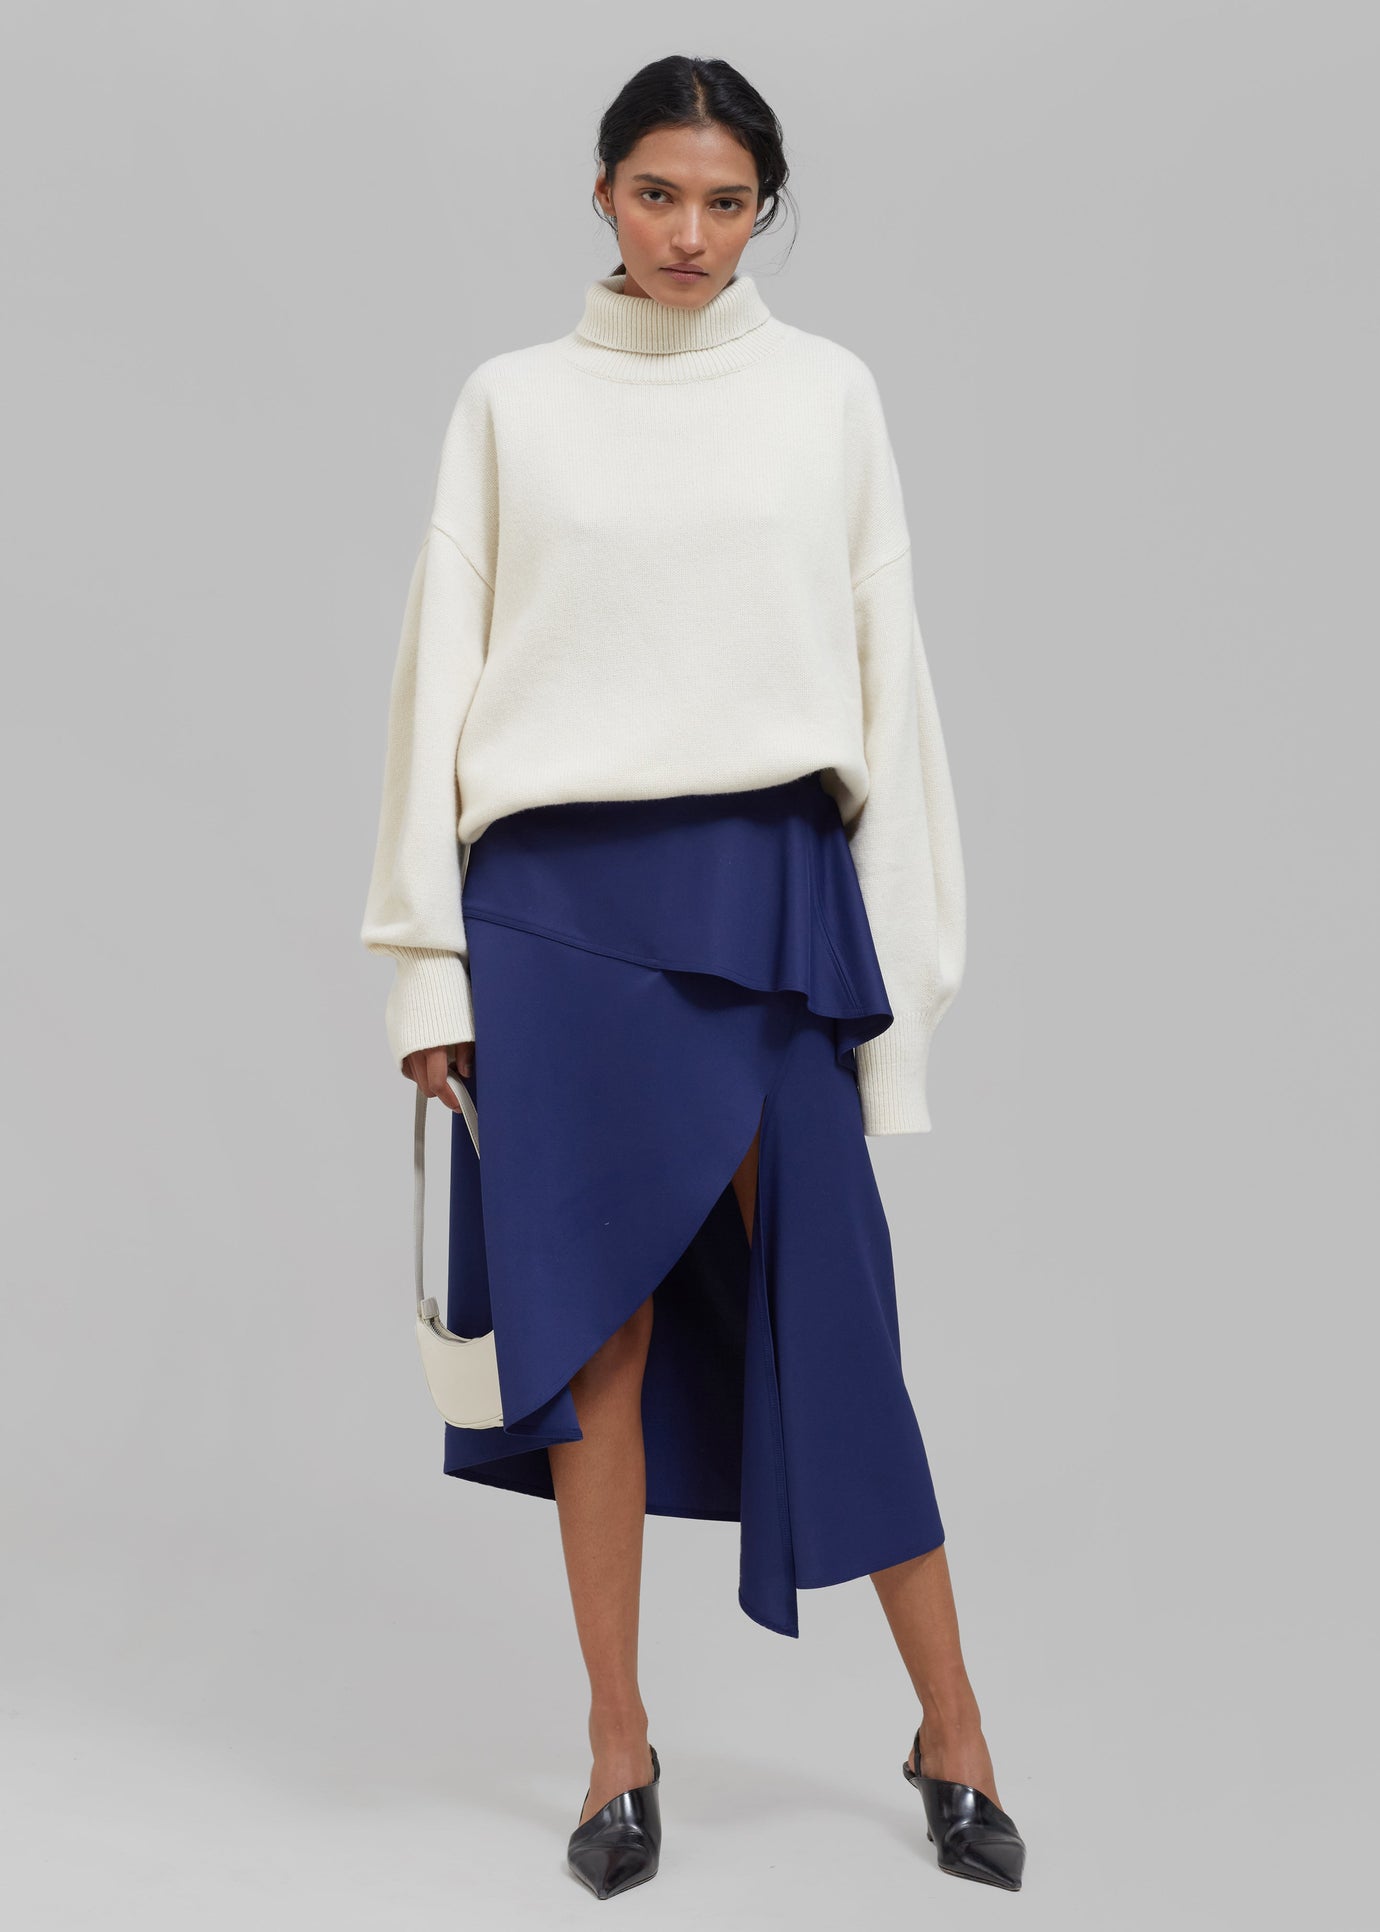 JW Anderson Peplum Slit Skirt - Oxford Blue